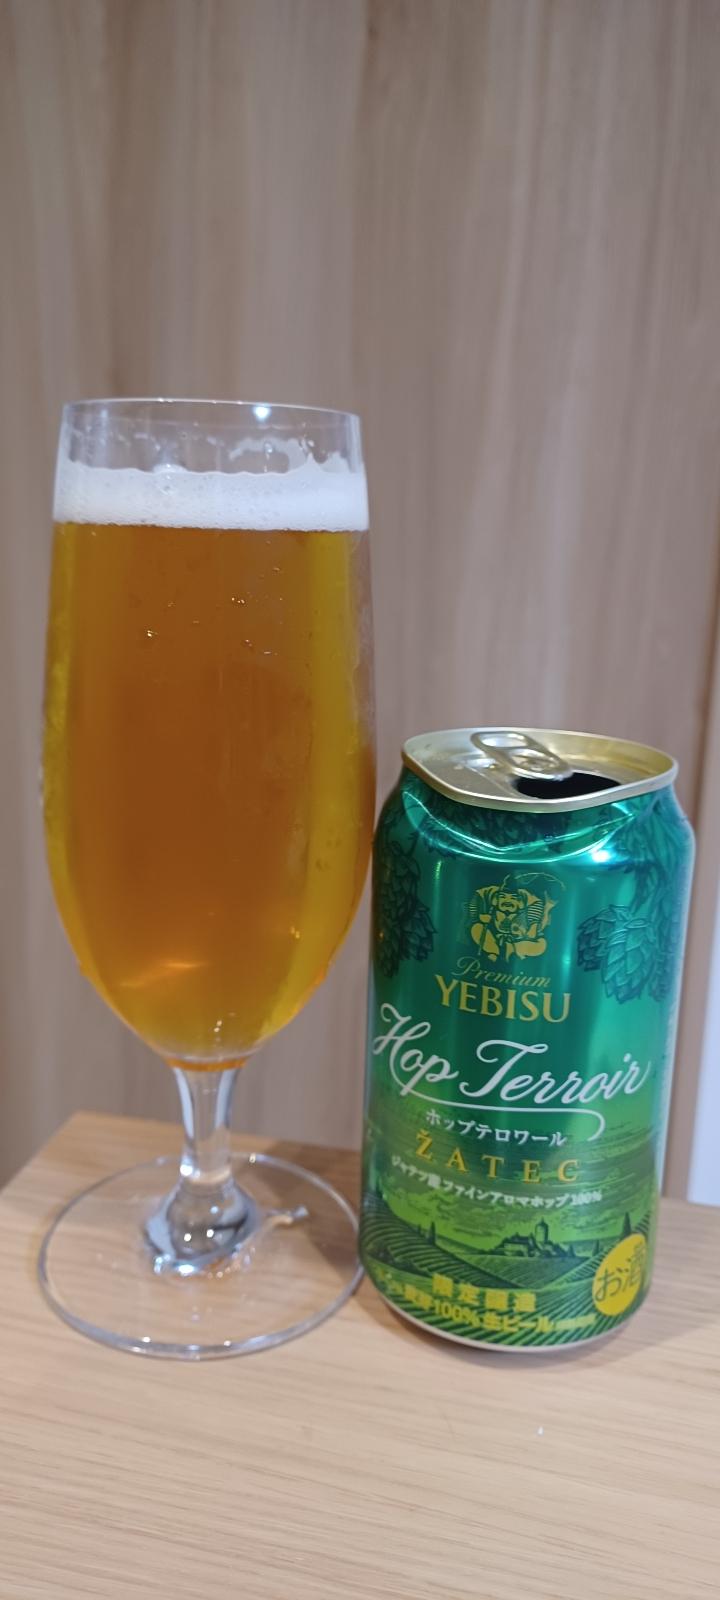 Yebisu Premium Hop Terroir - Žatec